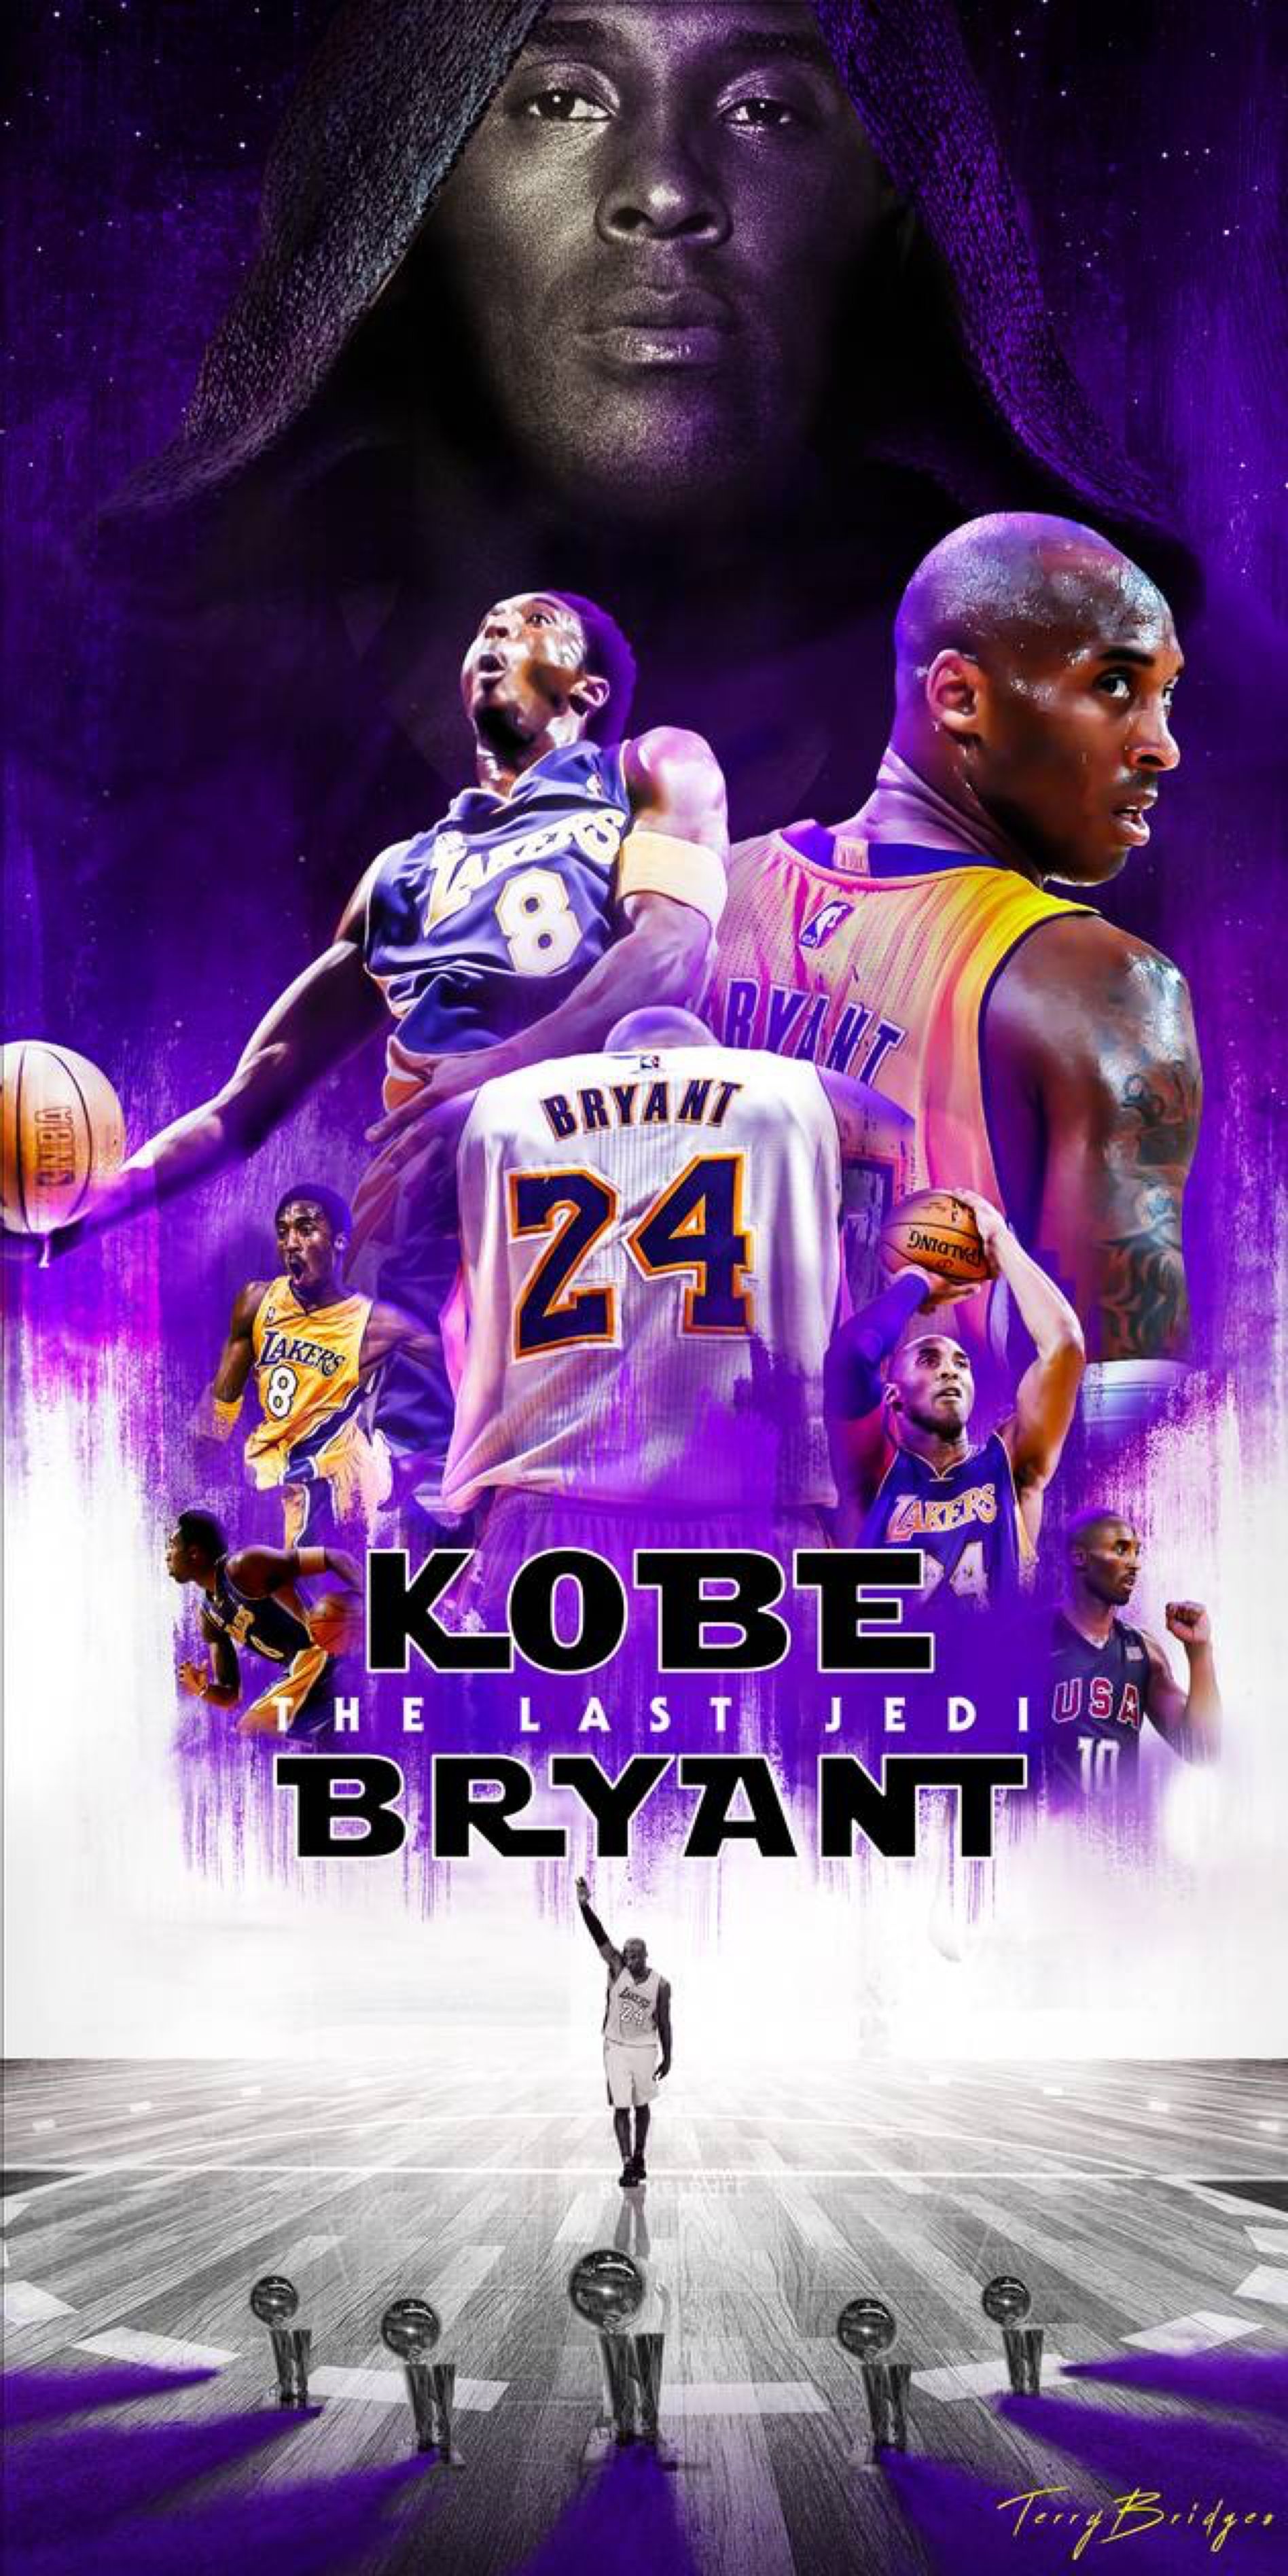 Kobe Bryant: The Last Jedi By HZ Designs. Kobe Bryant Wallpaper, Kobe Bryant Picture, Lakers Kobe